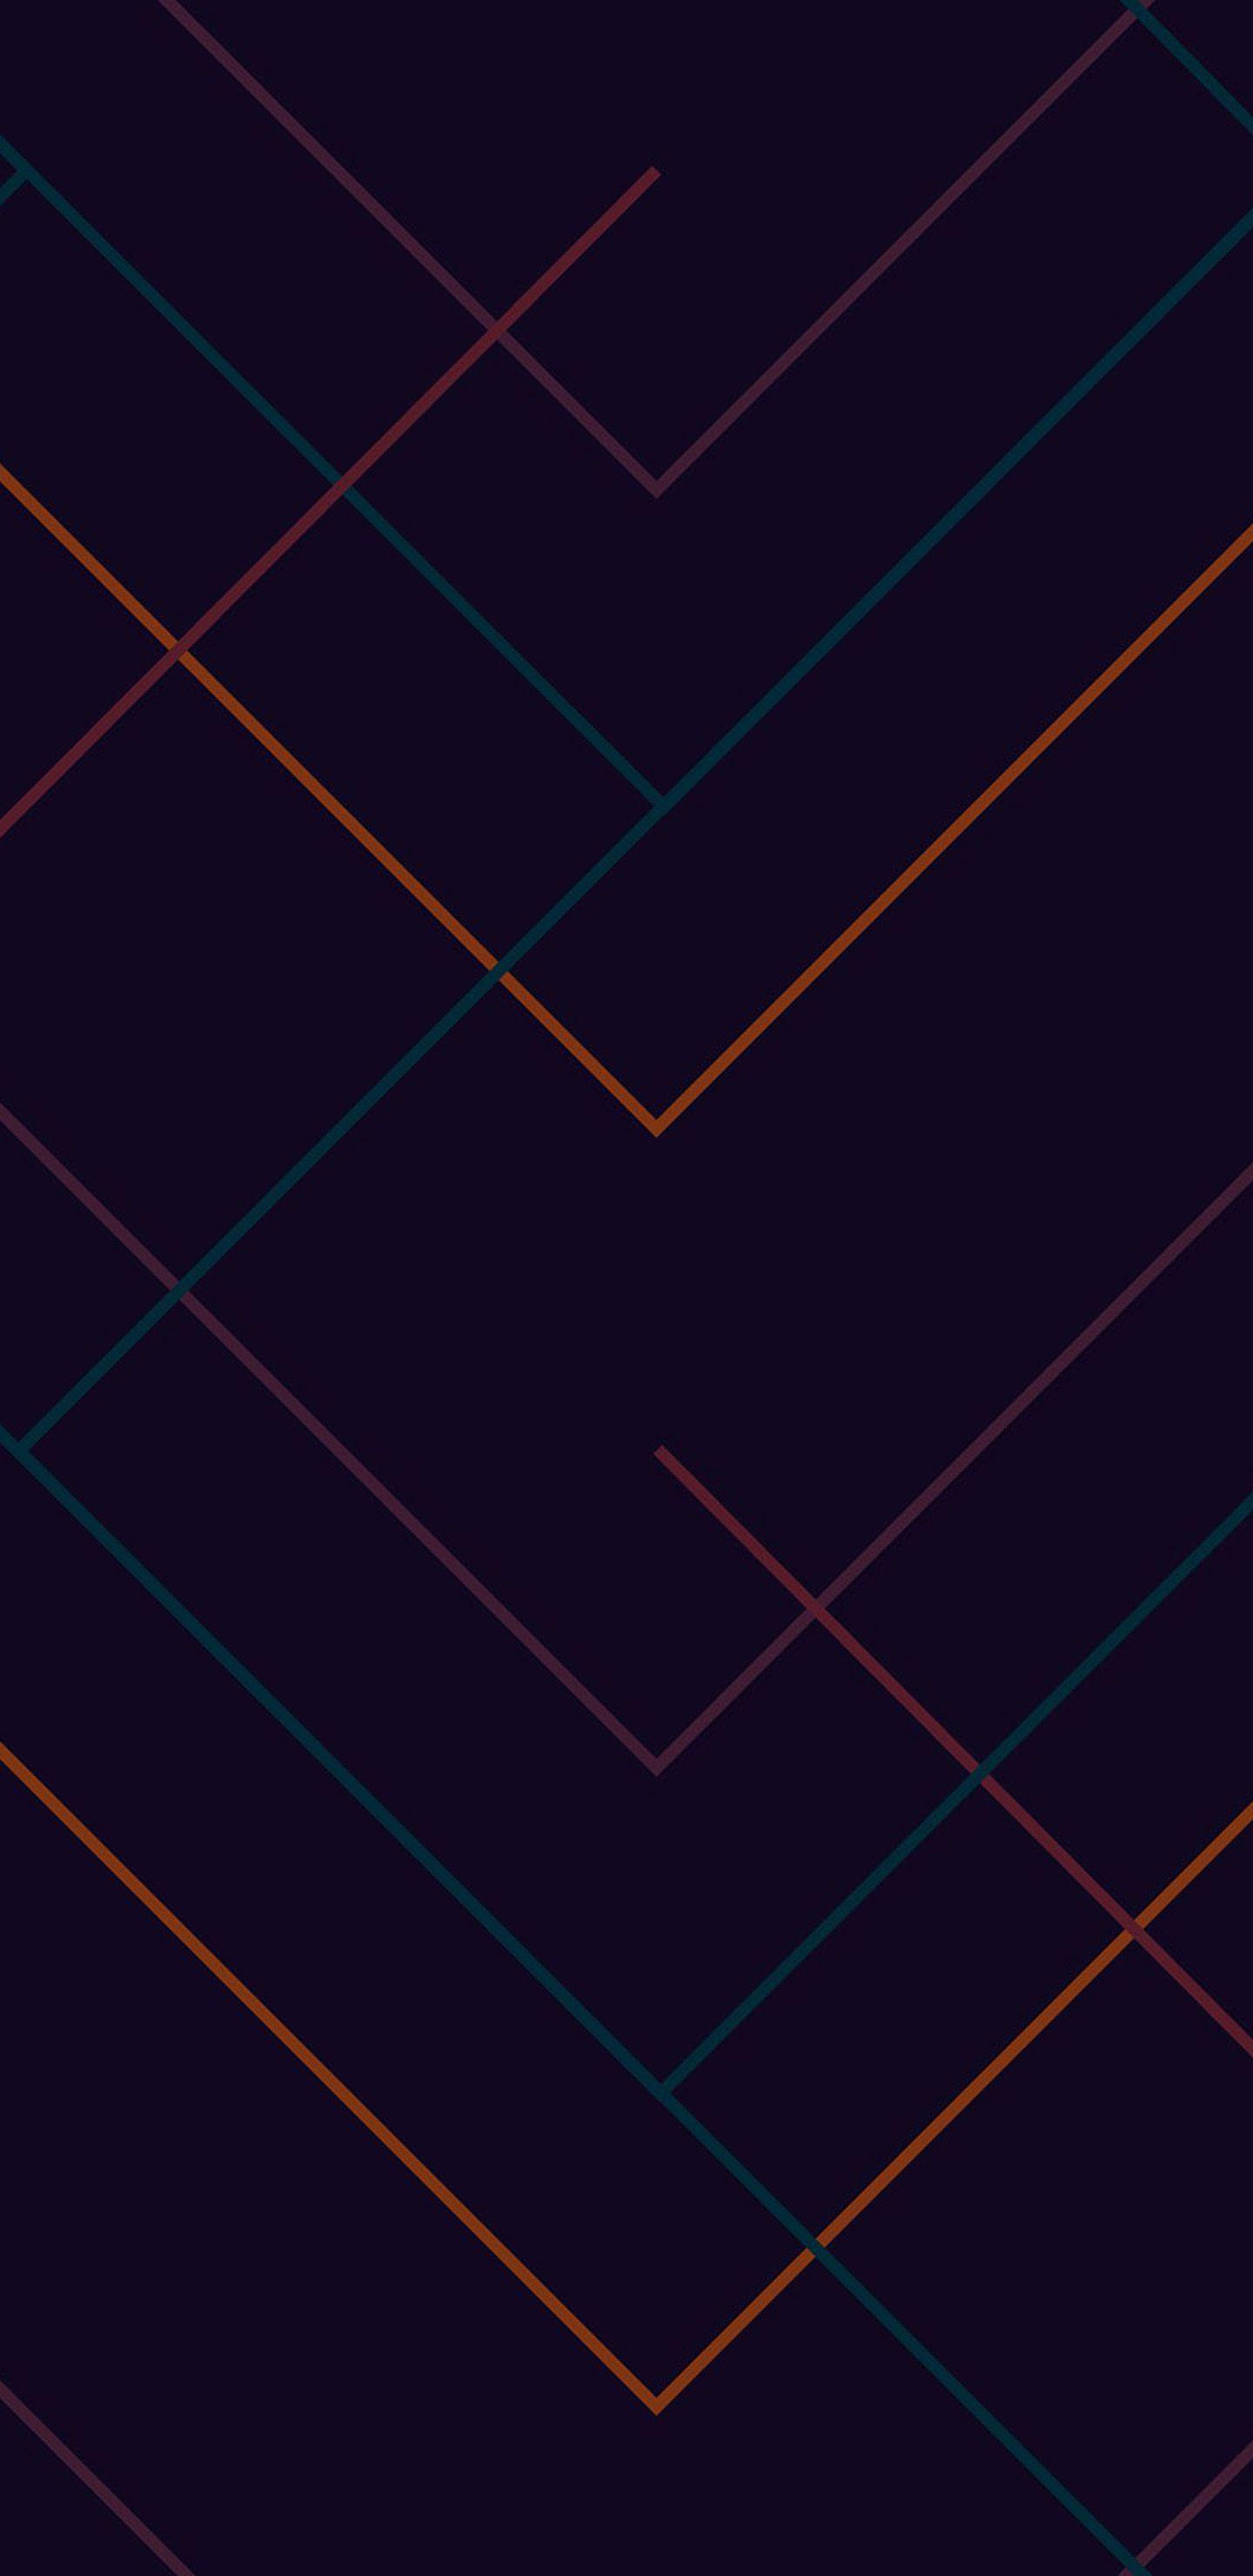 Abstract dark geometric pattern Galaxy Note 8 Wallpaper. Galaxy